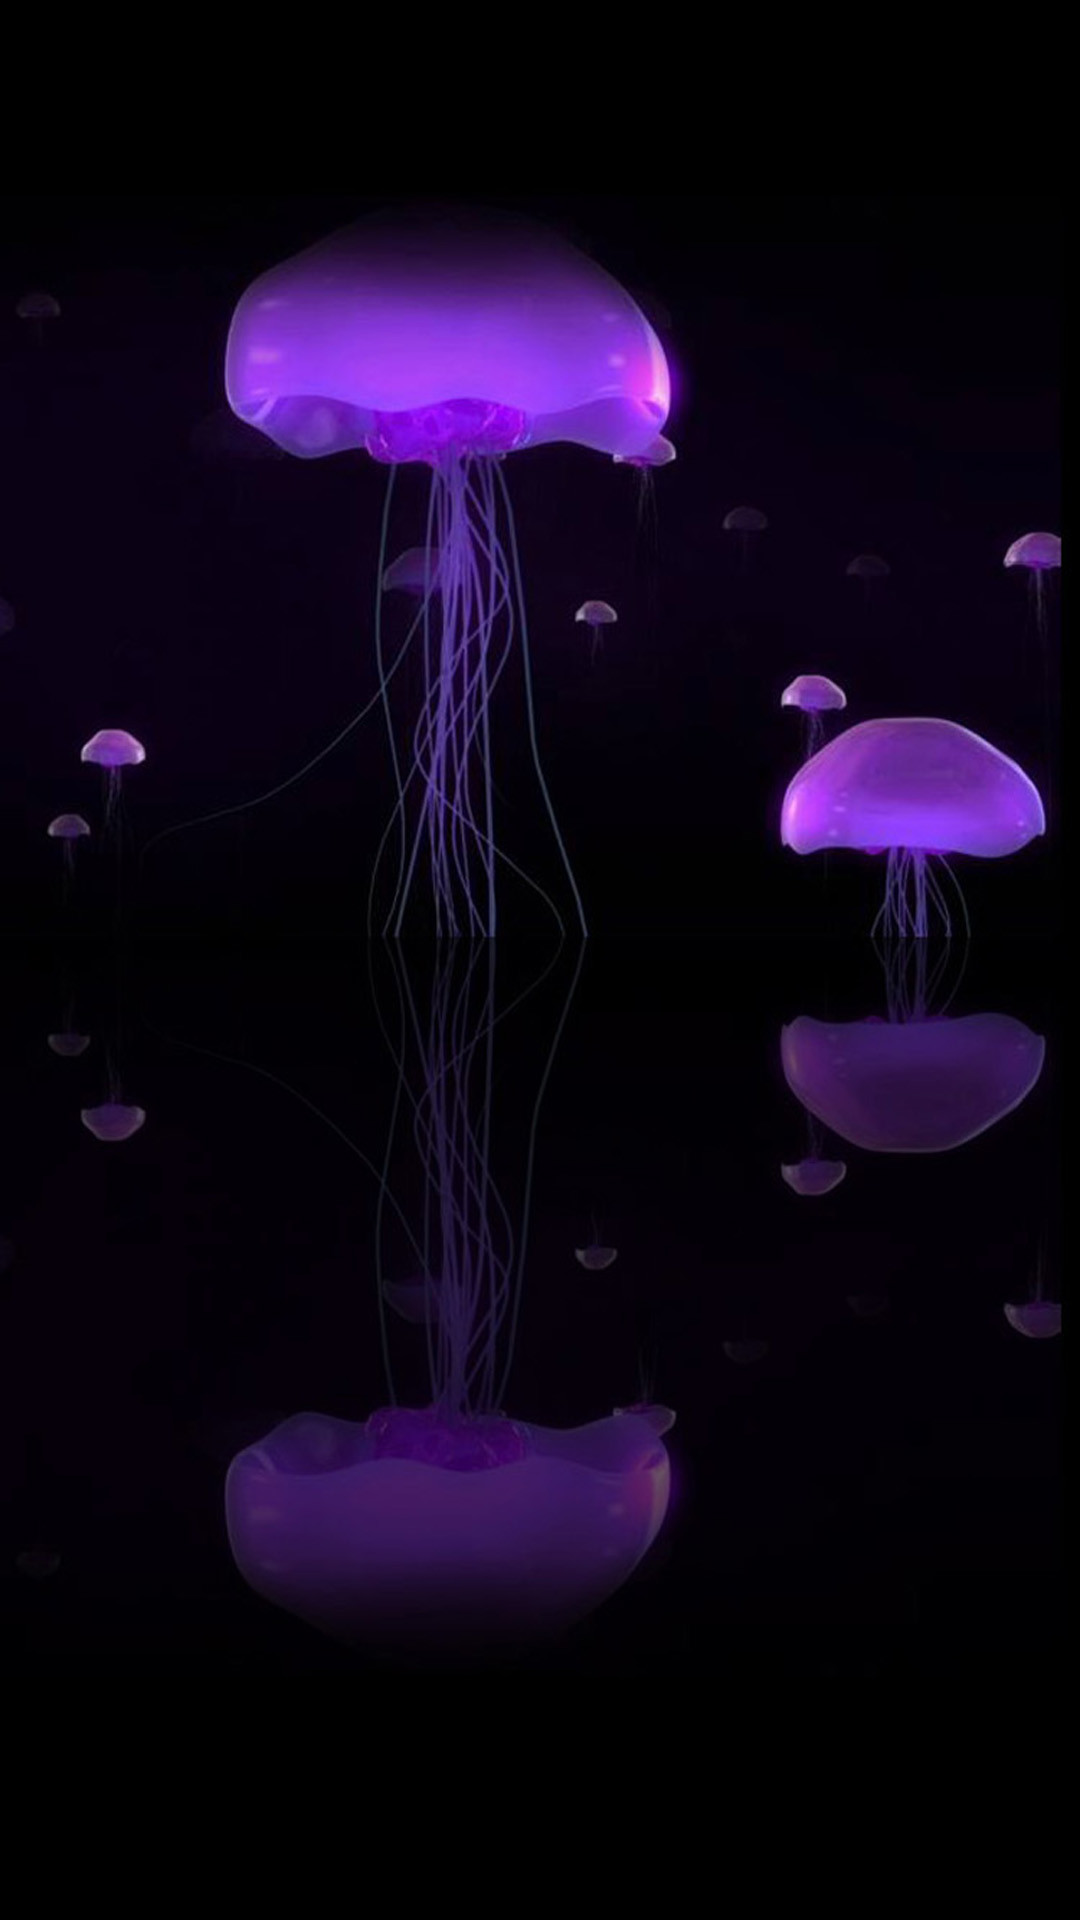 1080x1920 3D purple mushroom iPhone 6 Wallpaper and iPhone 6 Plus Wallpapers